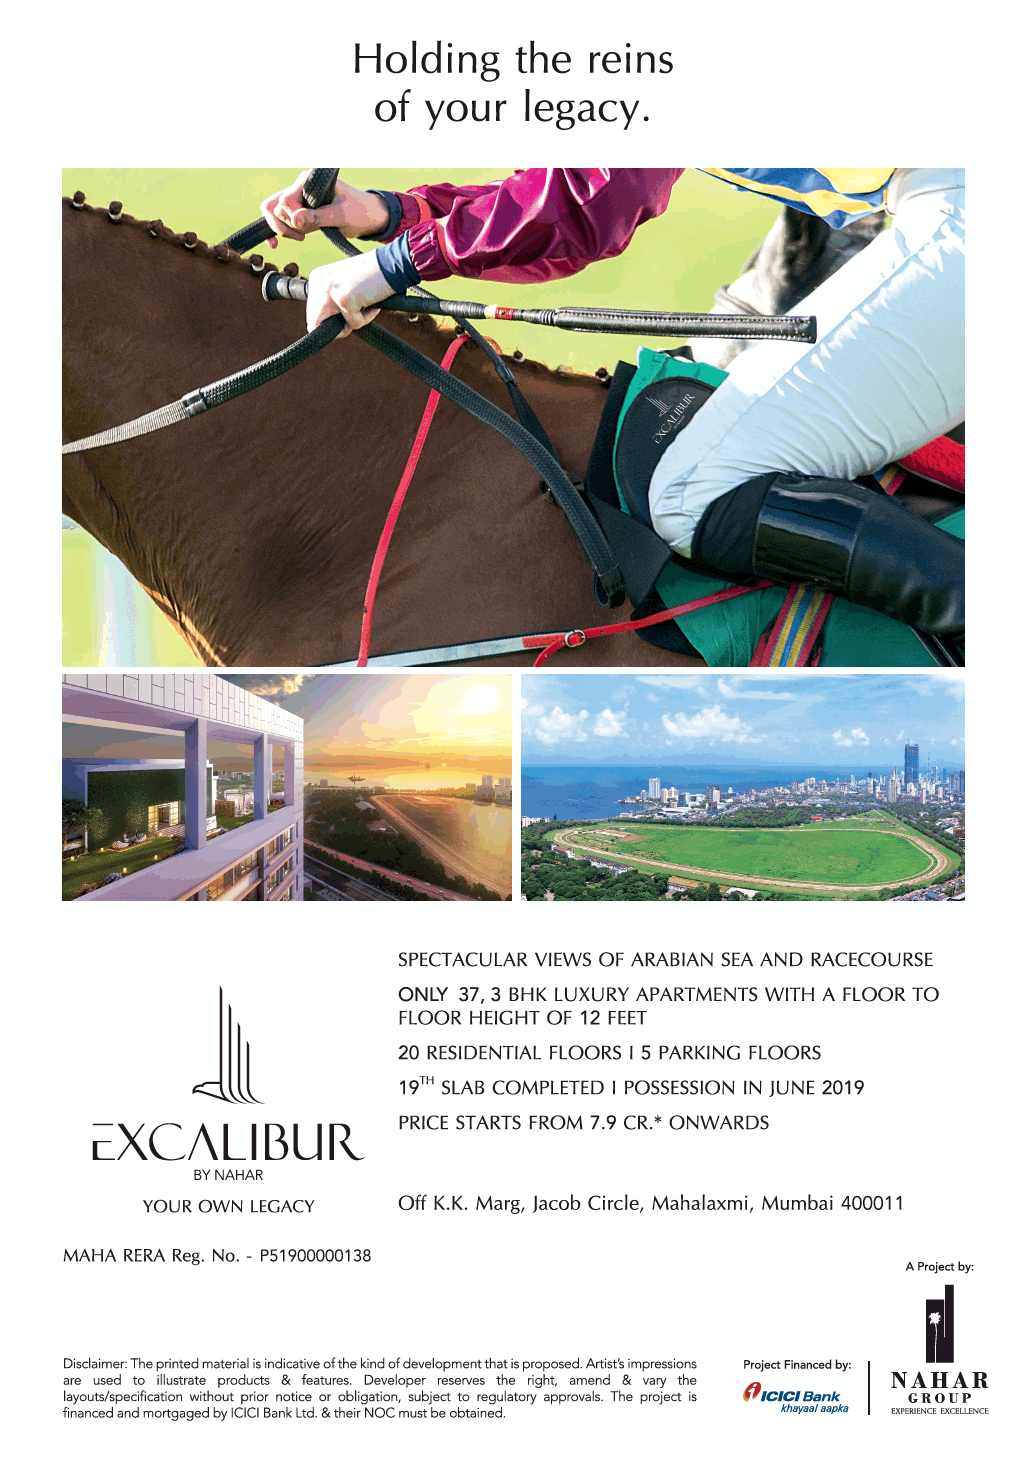 Enjoy the spectacular views of the Arabian Sea & race course at Nahar Excalibur in Mumbai